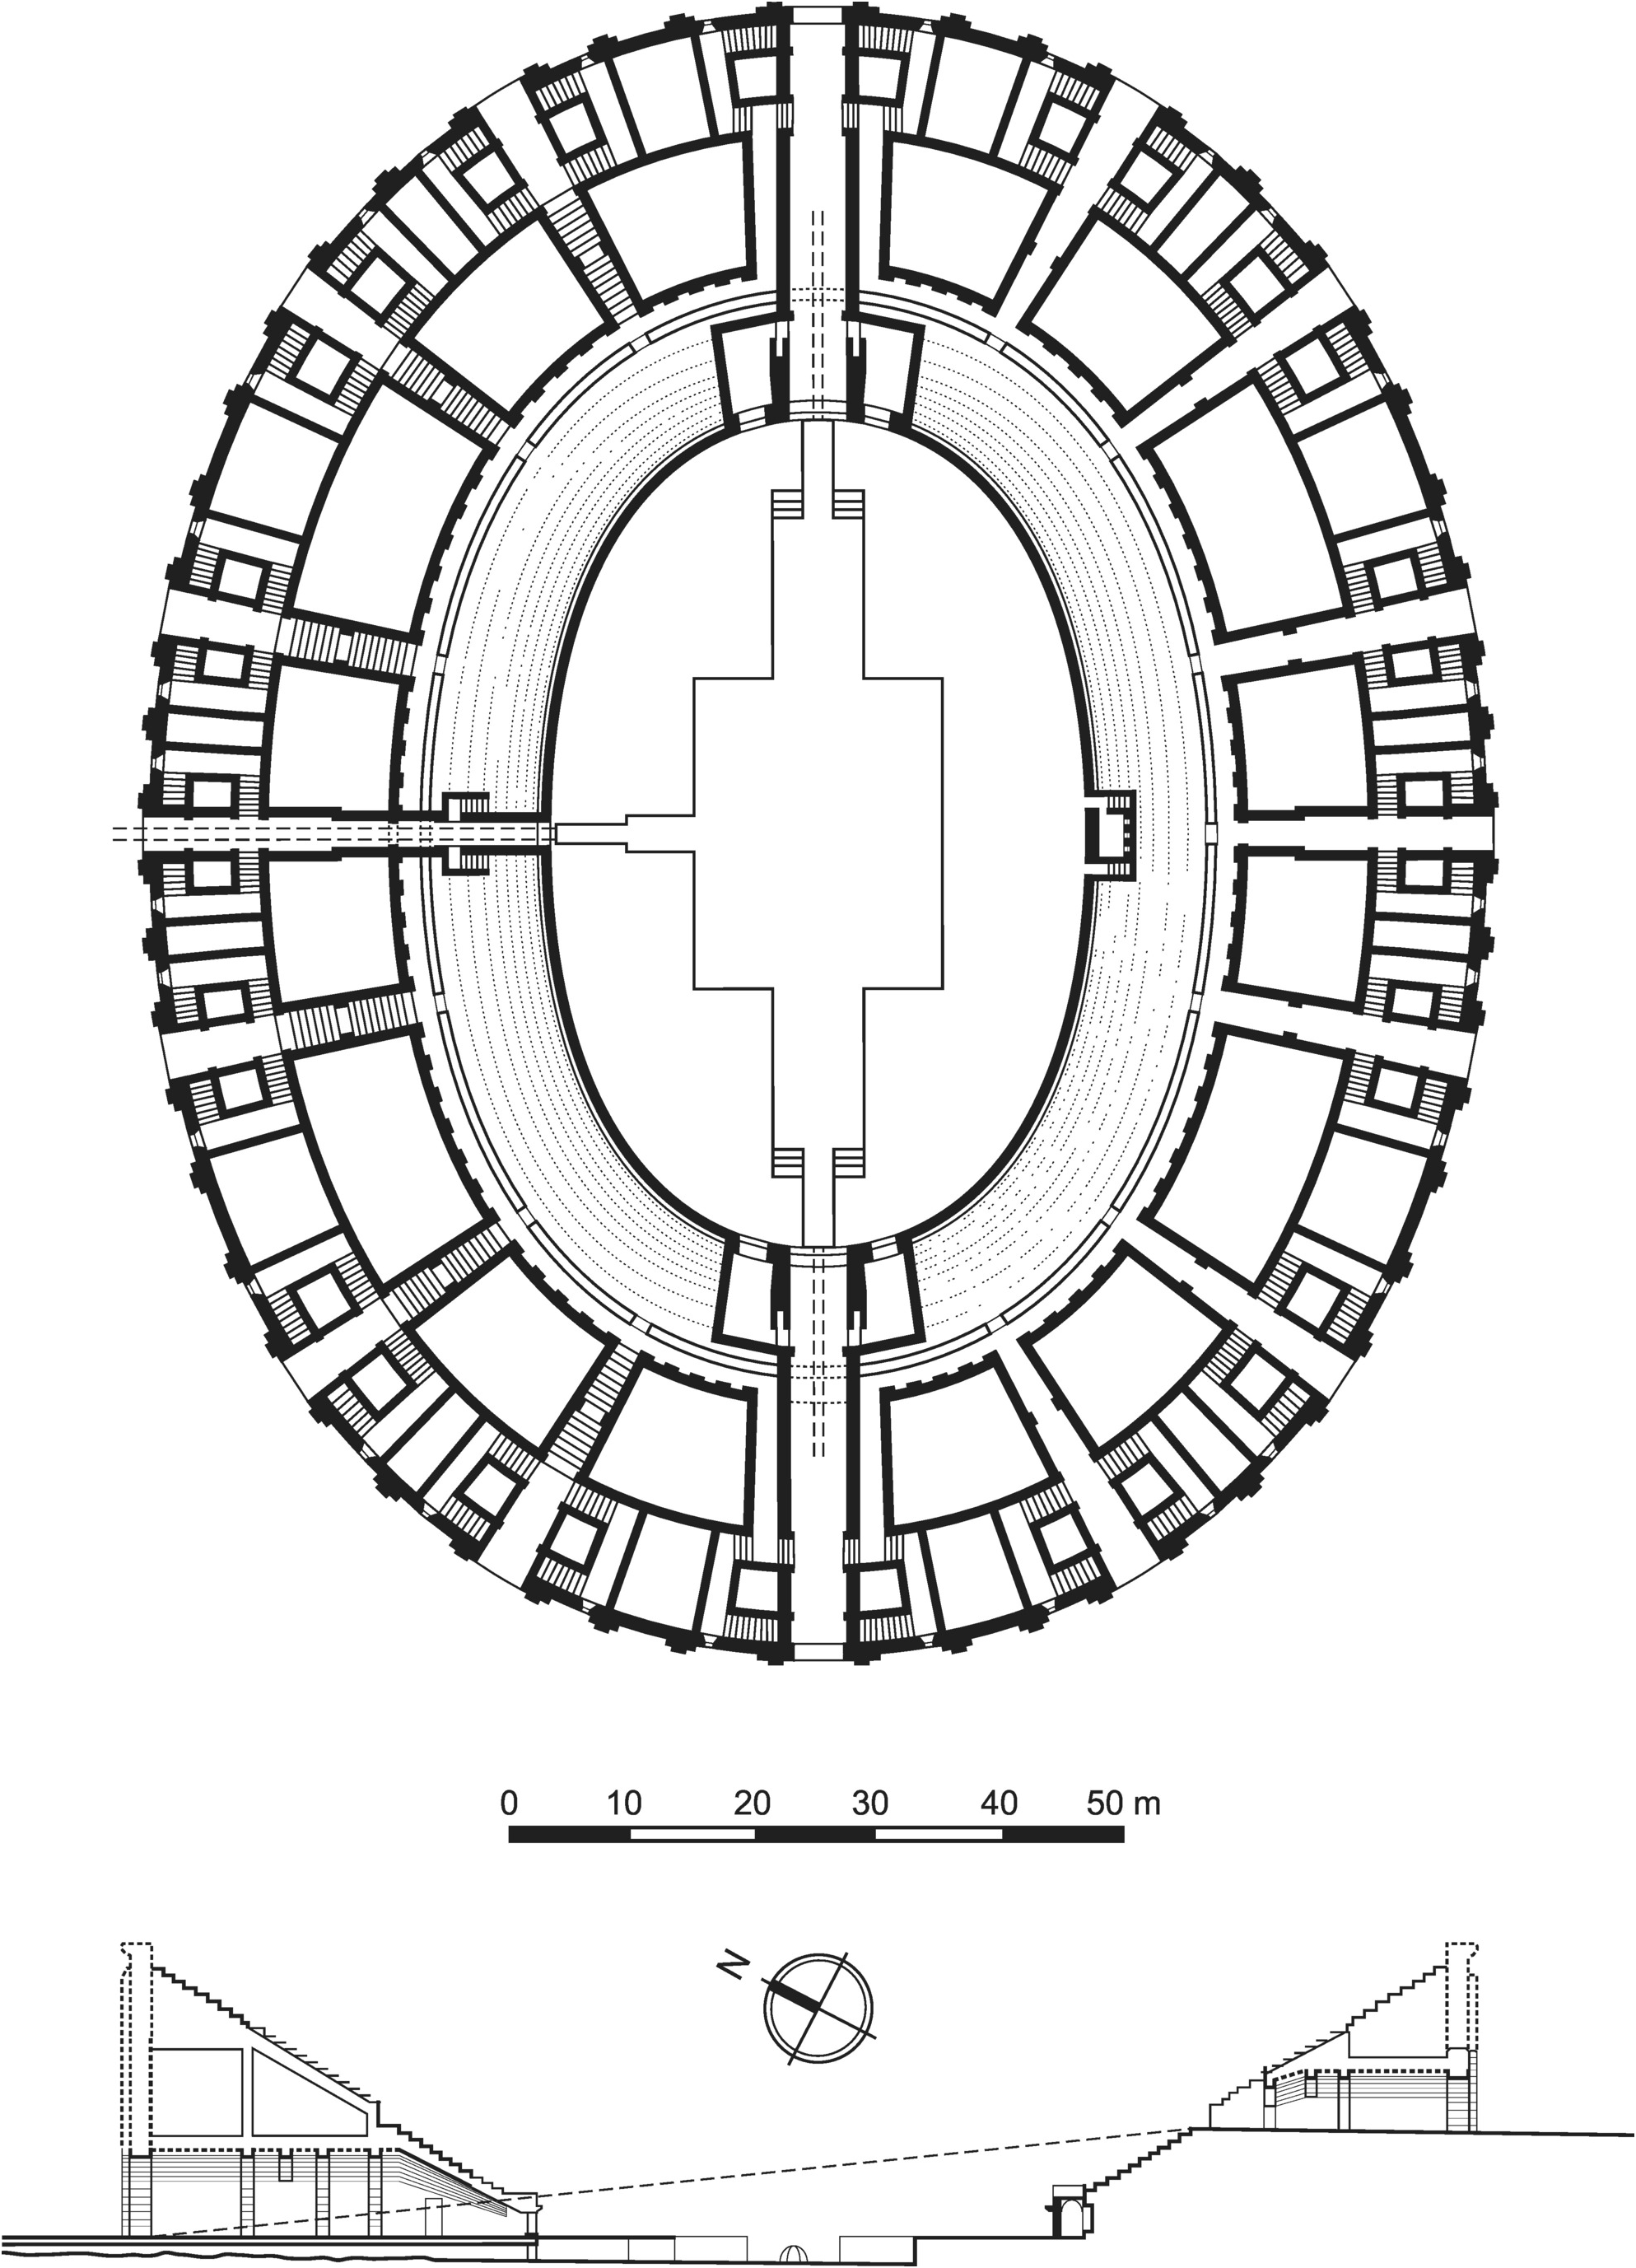 Charter Spectrum Amphitheatre Seating Chart